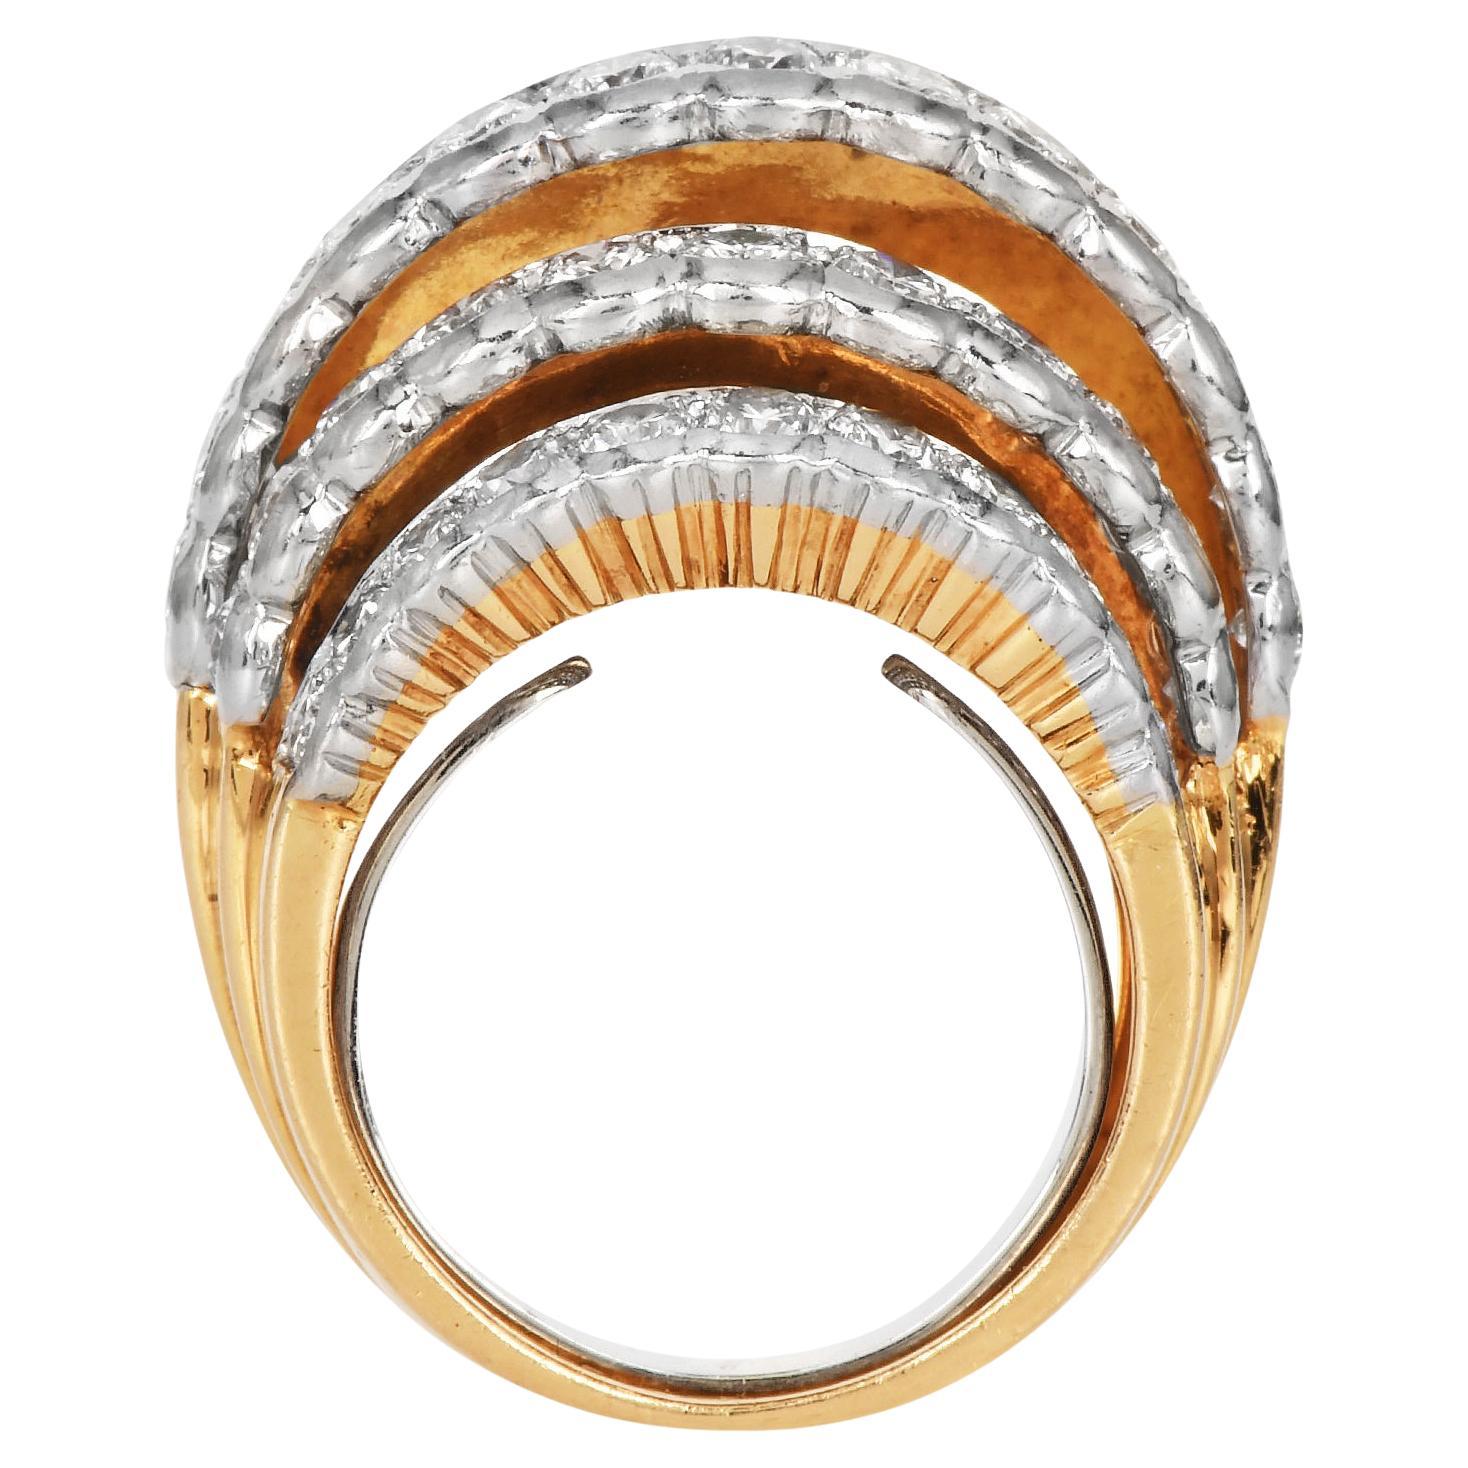  Cartier Paris Vintage Diamond 18K Gold Stepped Cocktail Ring